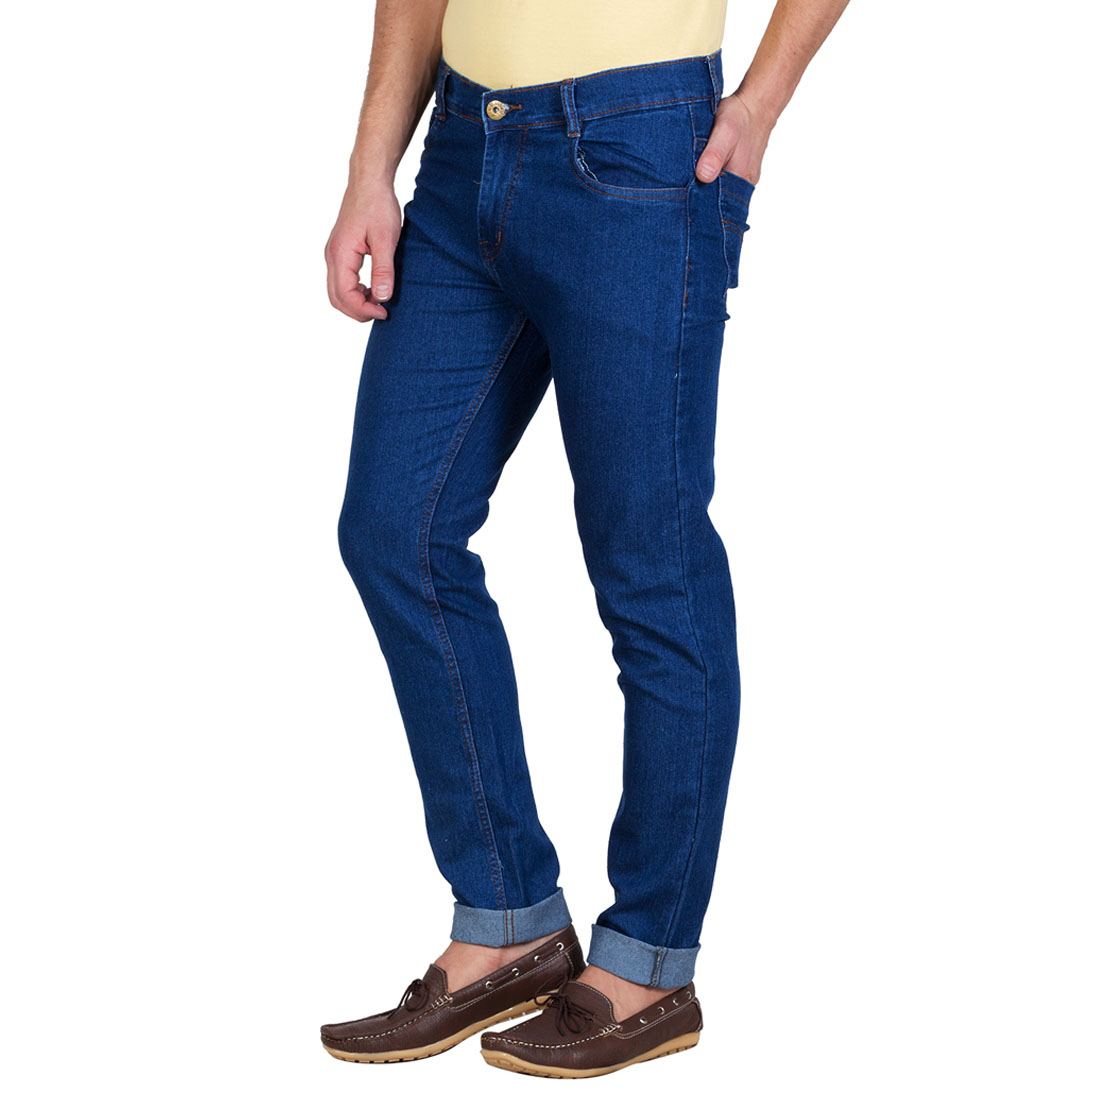 Jeans for Men , Denim Jeans, low prize jeans, branded jeans, jeans ...